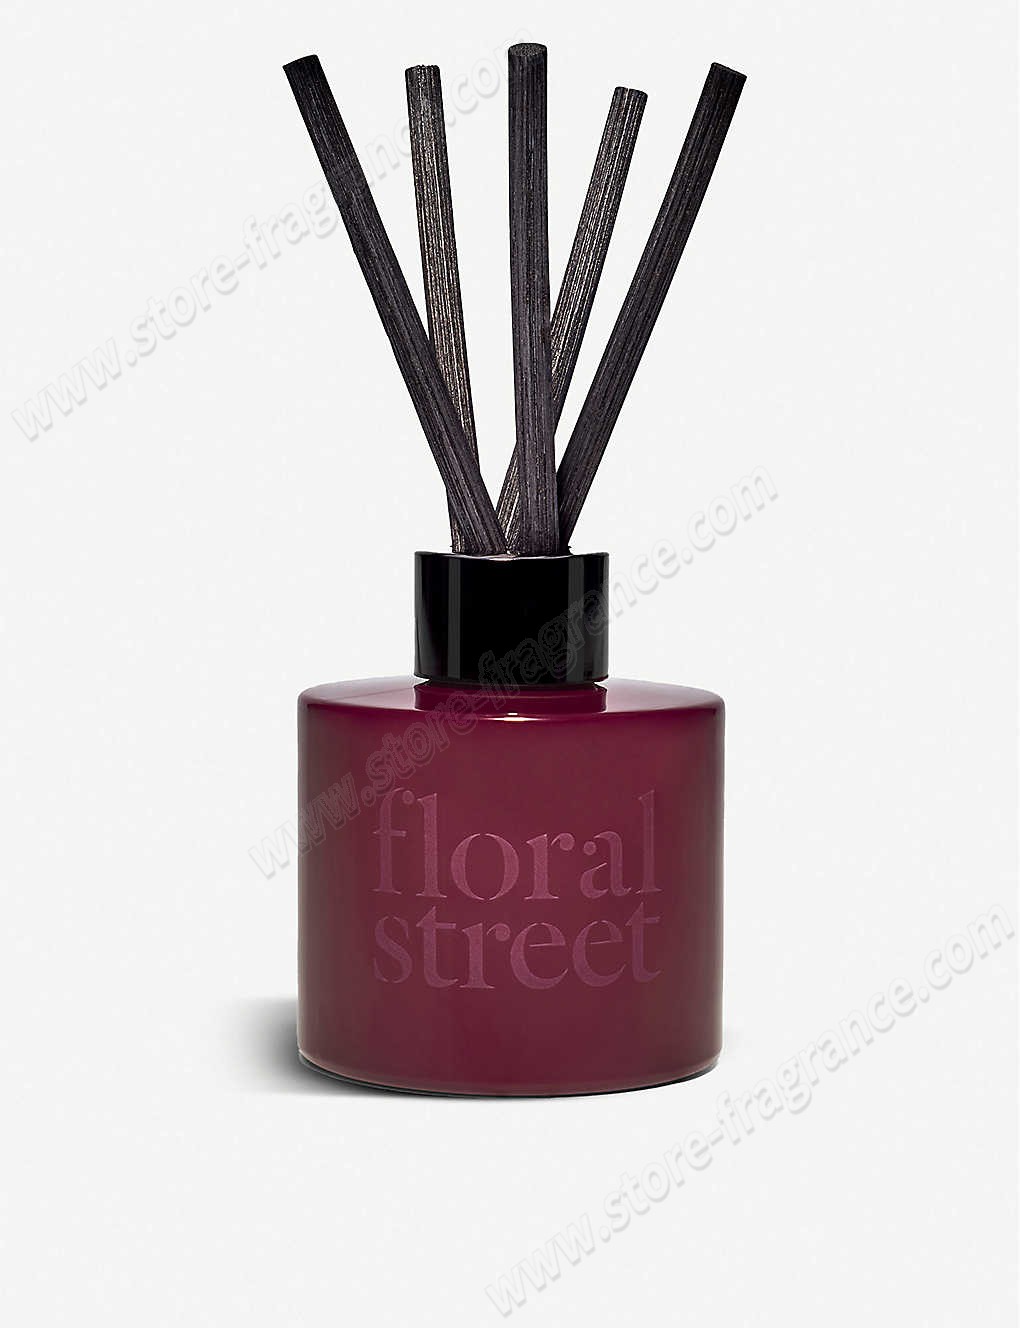 FLORAL STREET/Santal Mysore scent diffuser 100ml Limit Offer - -0